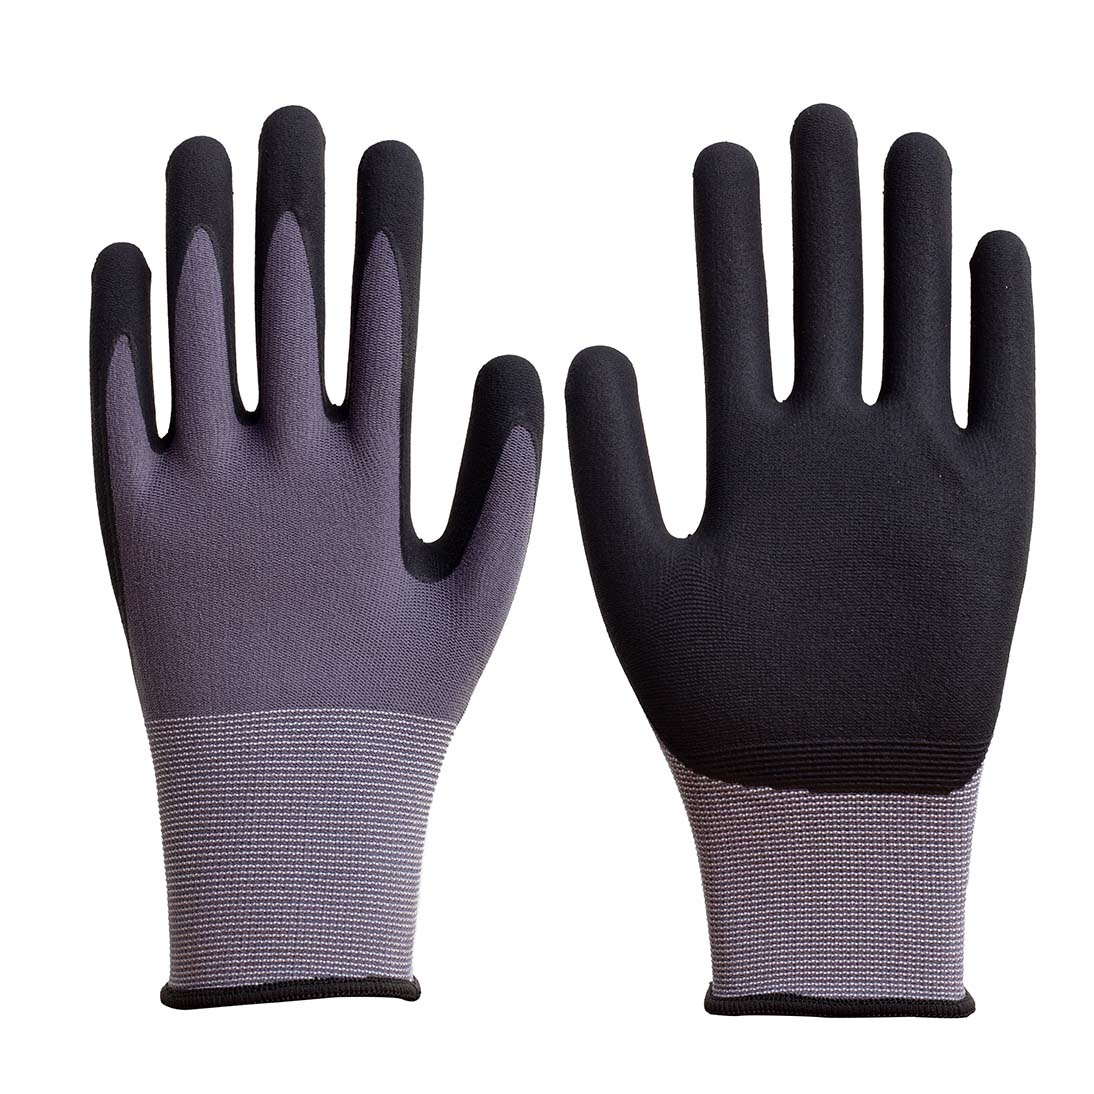 15G nylon spandex glove Micro foam nitrile and waterbased PU palm coated 